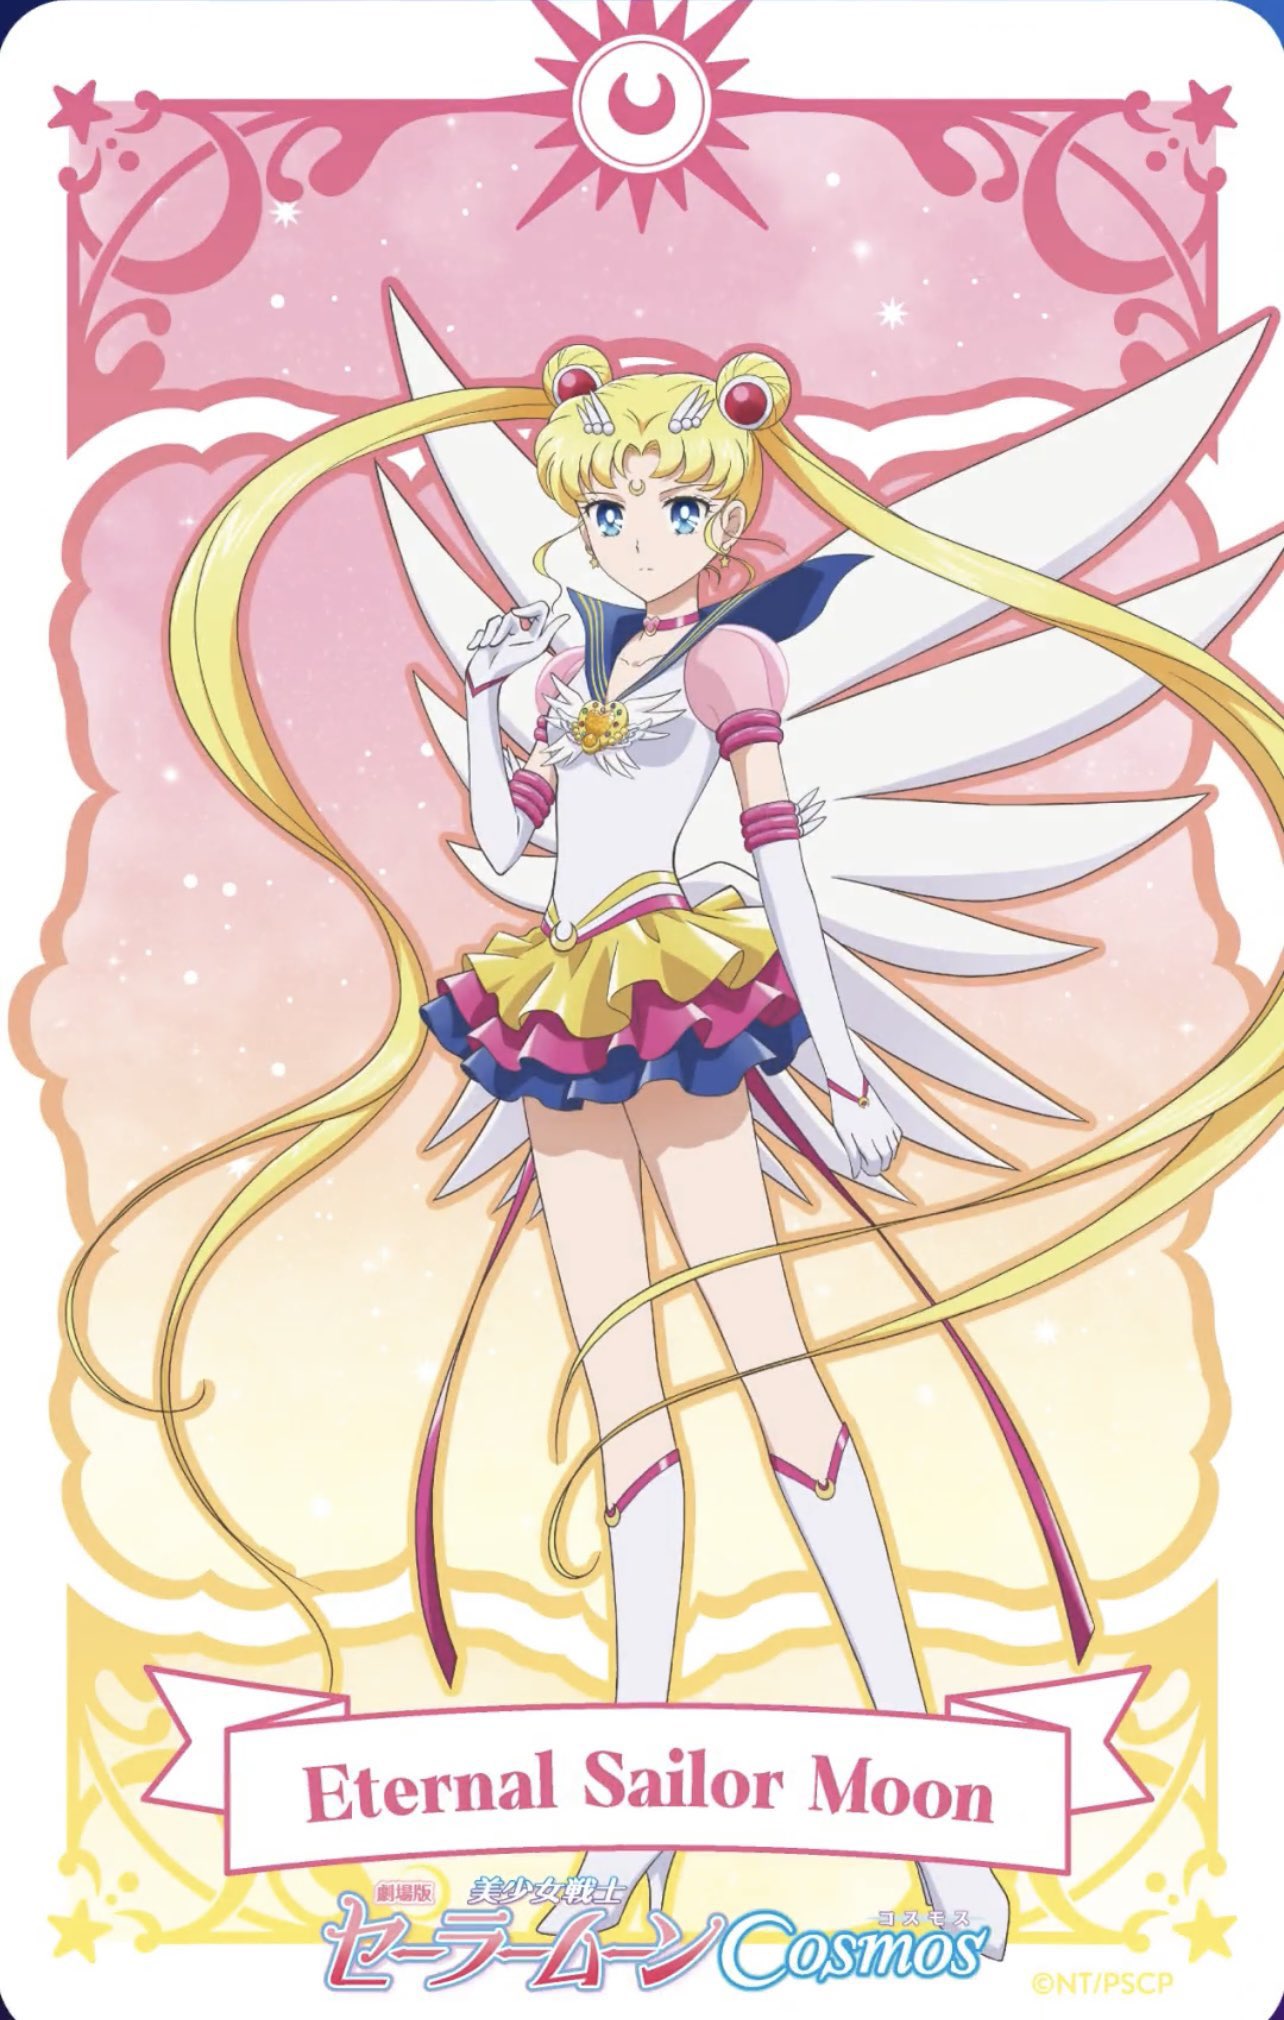 J on X: Pretty Guardian Sailor Moon Cosmos The Movie (Crystal Season V)  movie ticket illustration (by Kazuko Tadano) Eternal Sailor Moon & Eternal  Sailor Chibi Moon #SailorMoonCrystal #SailorMoonCosmos   / X